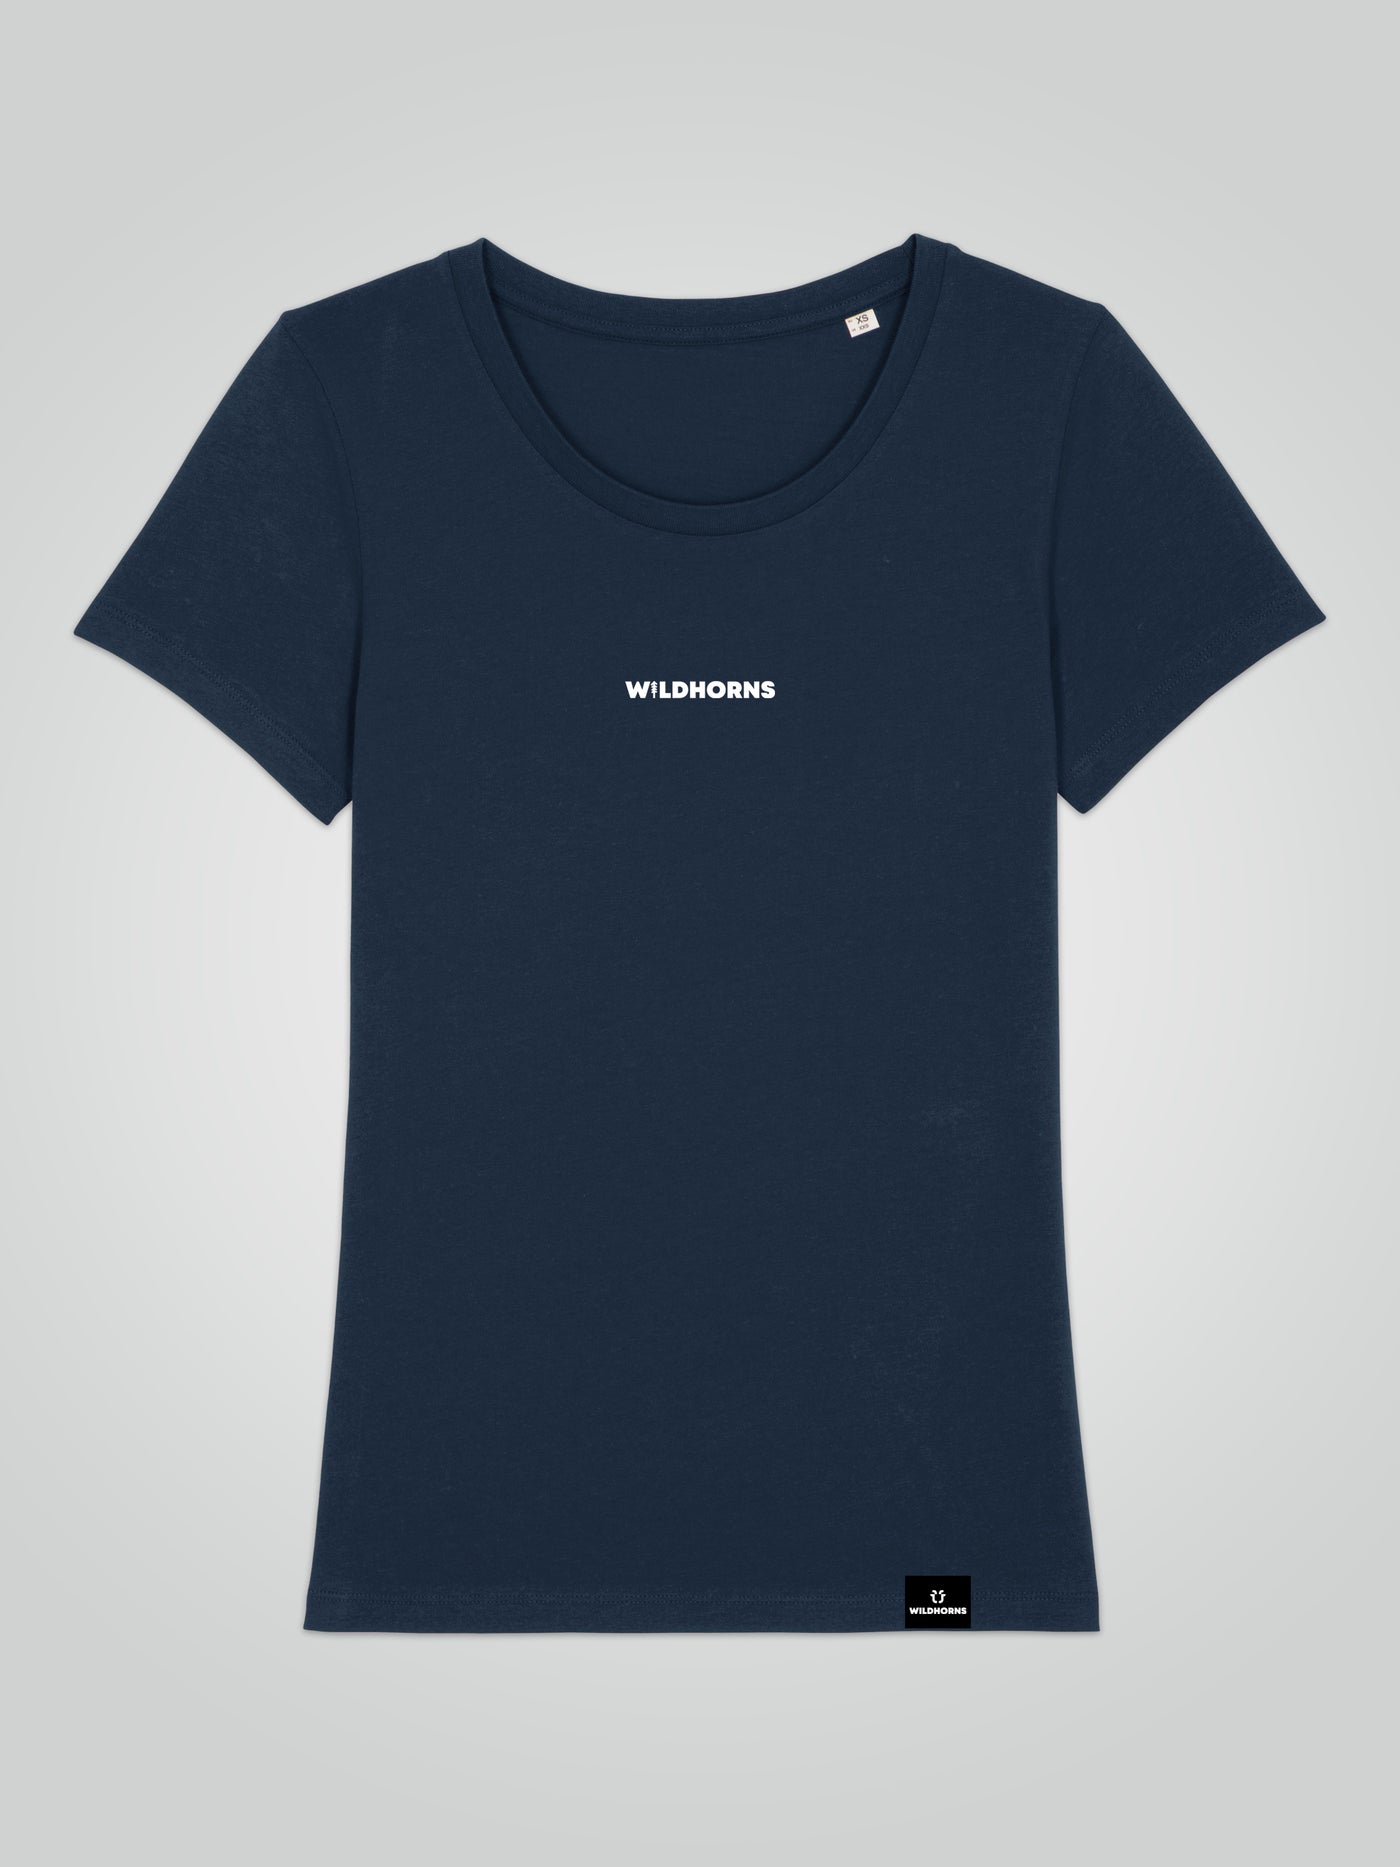 Wildhorns Tree - Women's Fitted T-Shirt